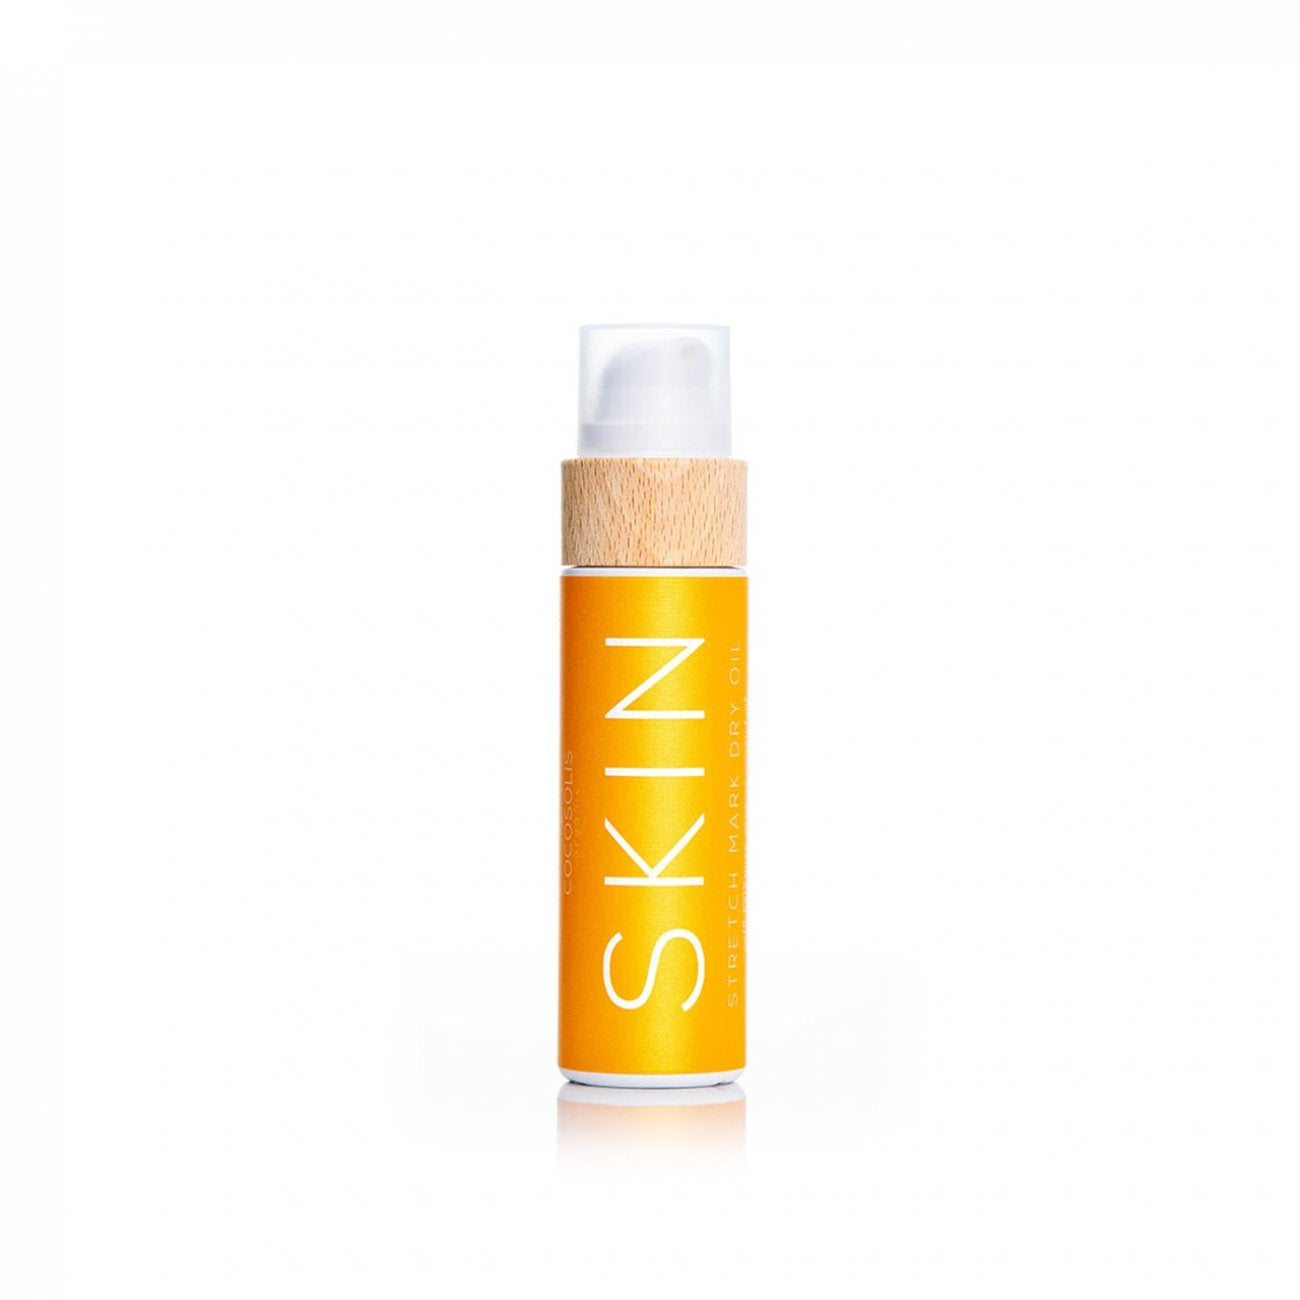 Skin Stretch Mark Dry Oil 110ml